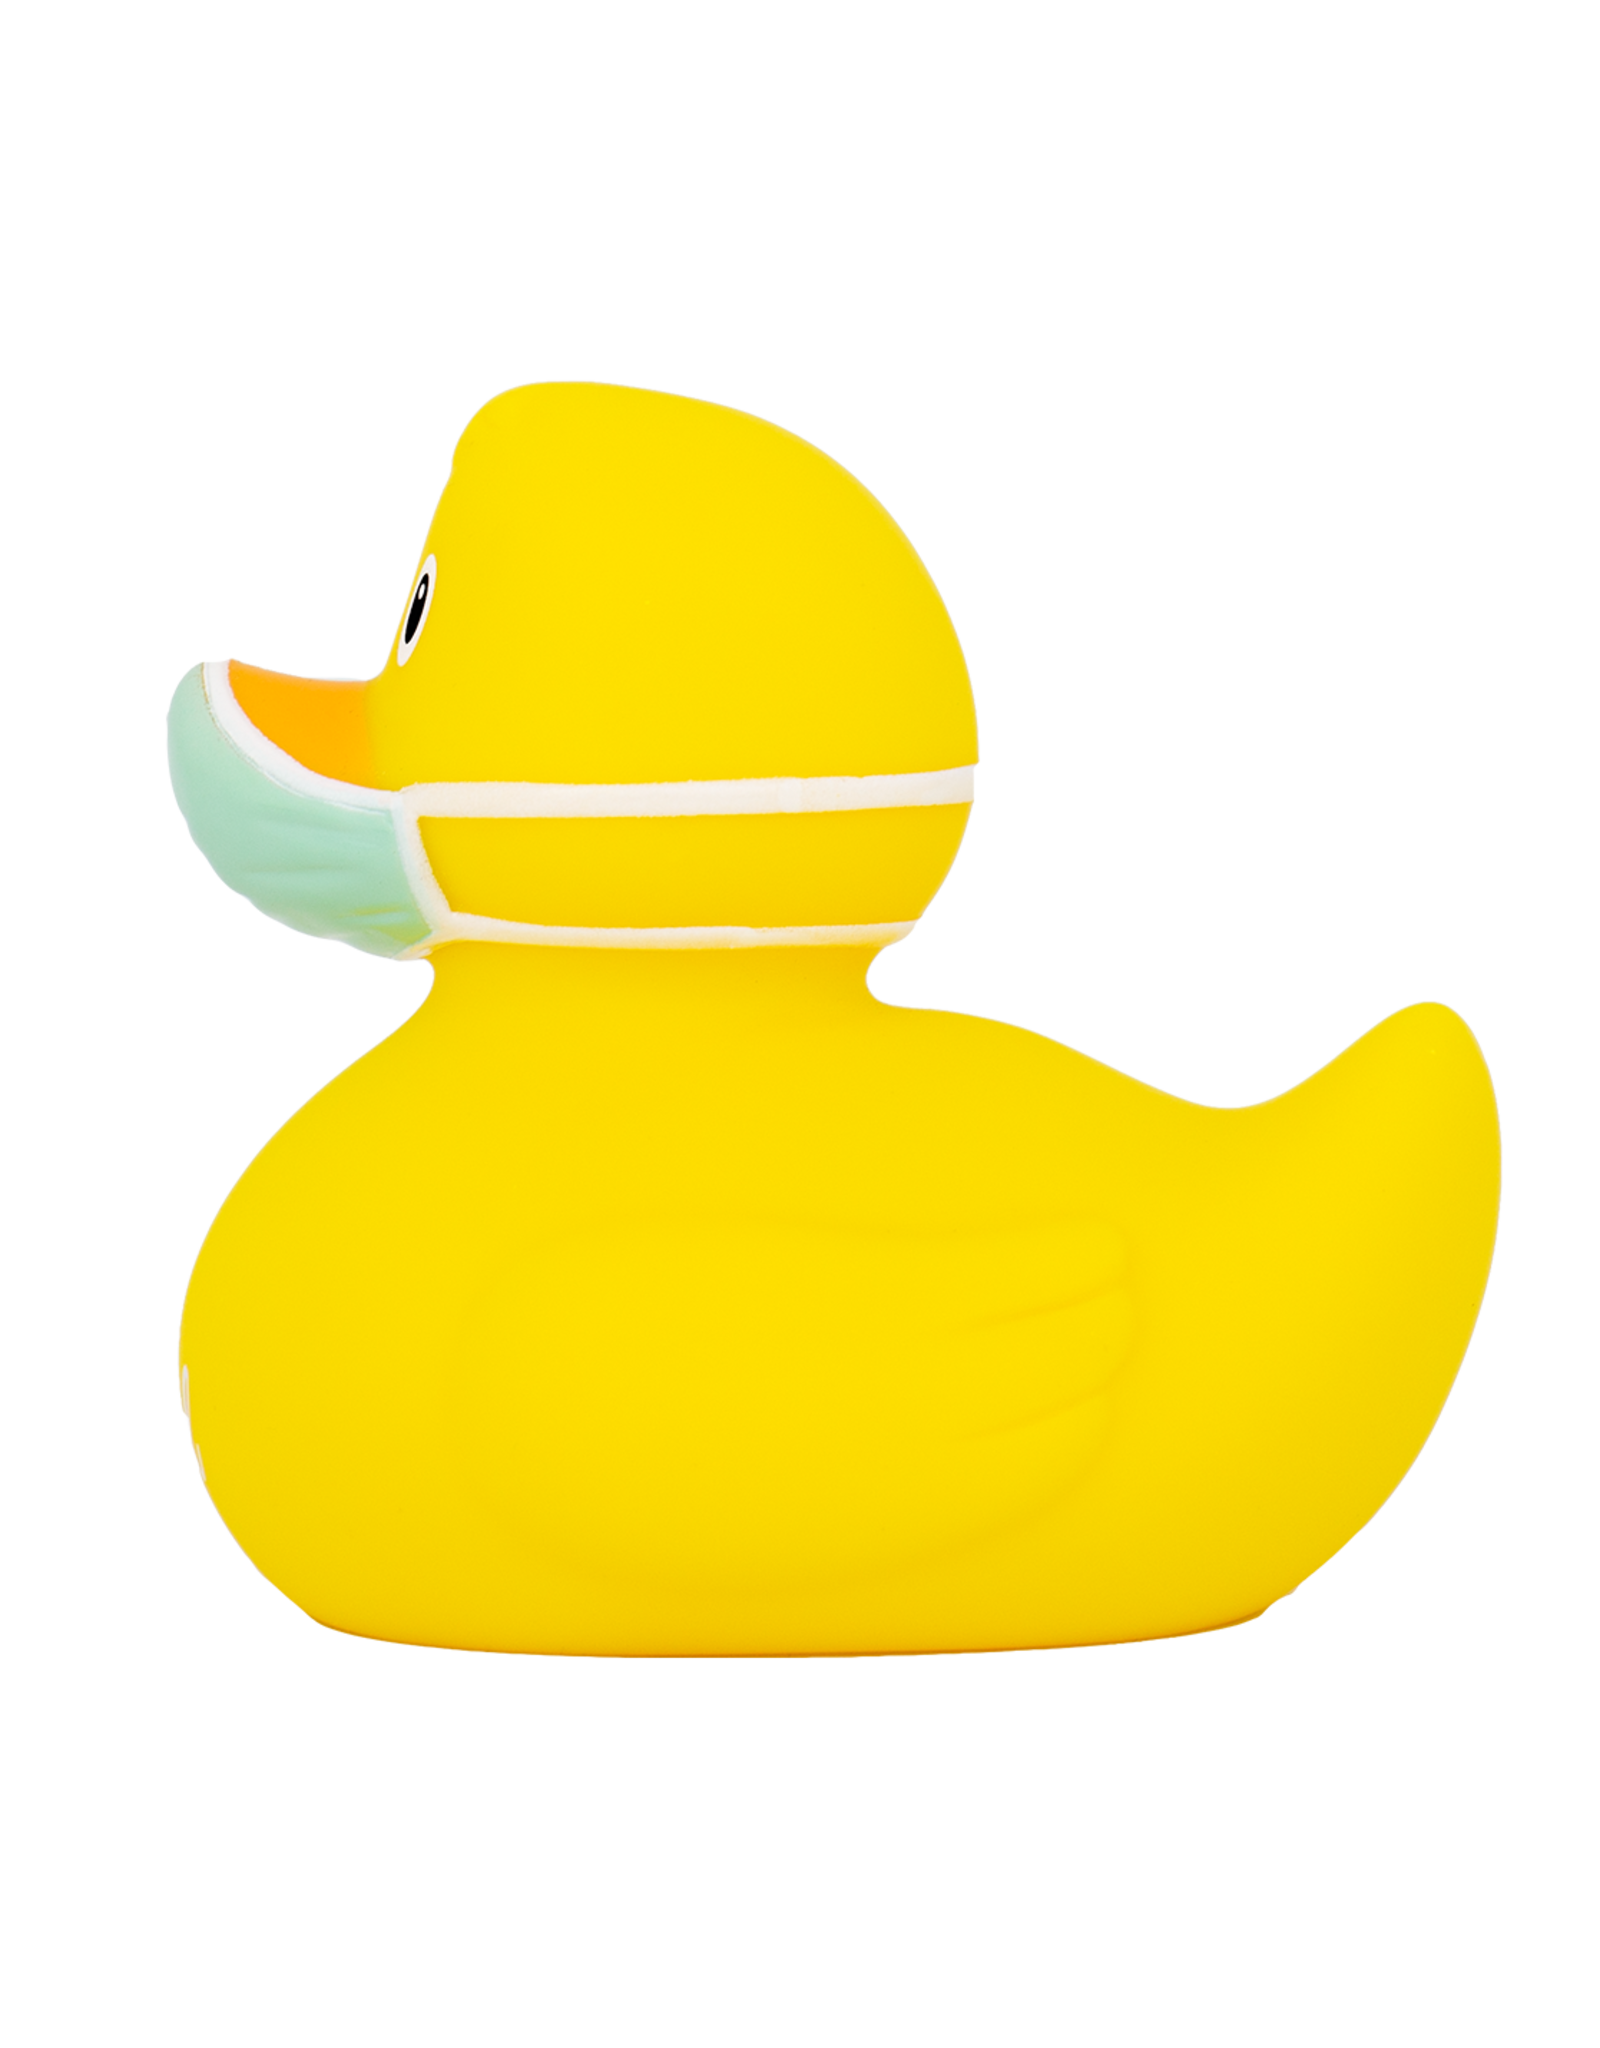 Lilalu Corona "New Normal" Rubber Duck